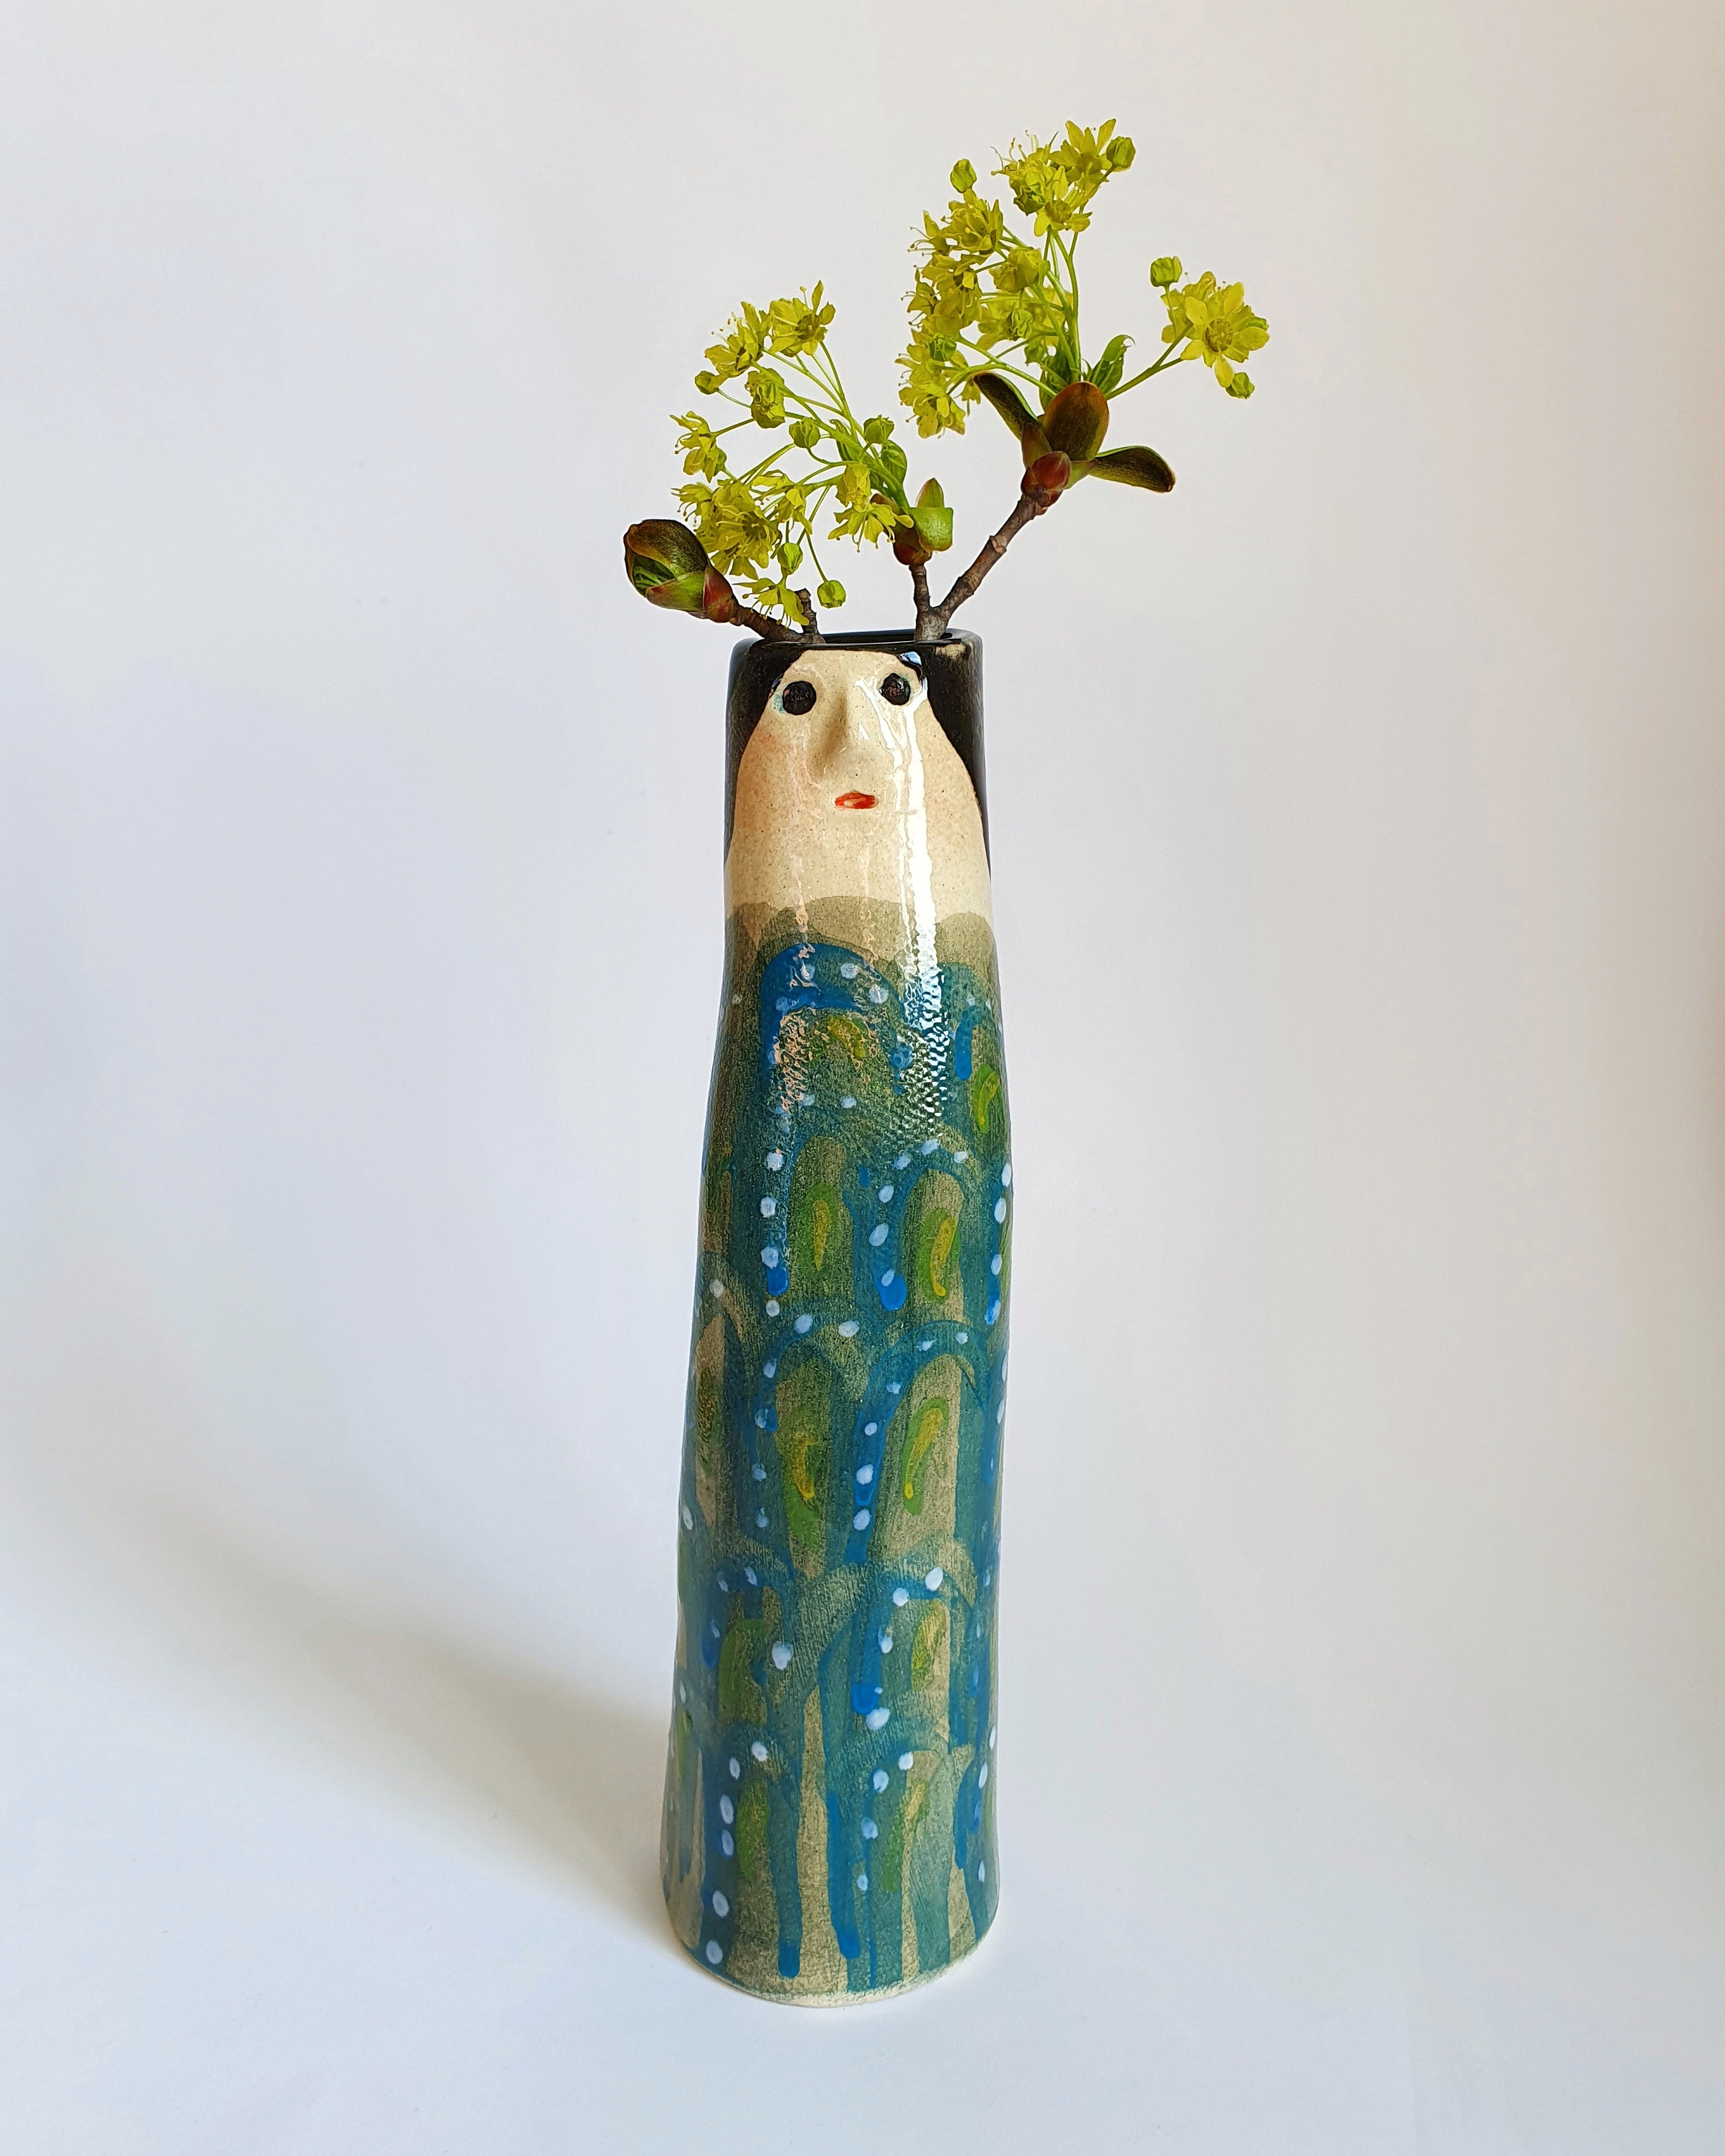 Decoration Vase Family Faces Portrait Head Sculpture – The Mob Wife